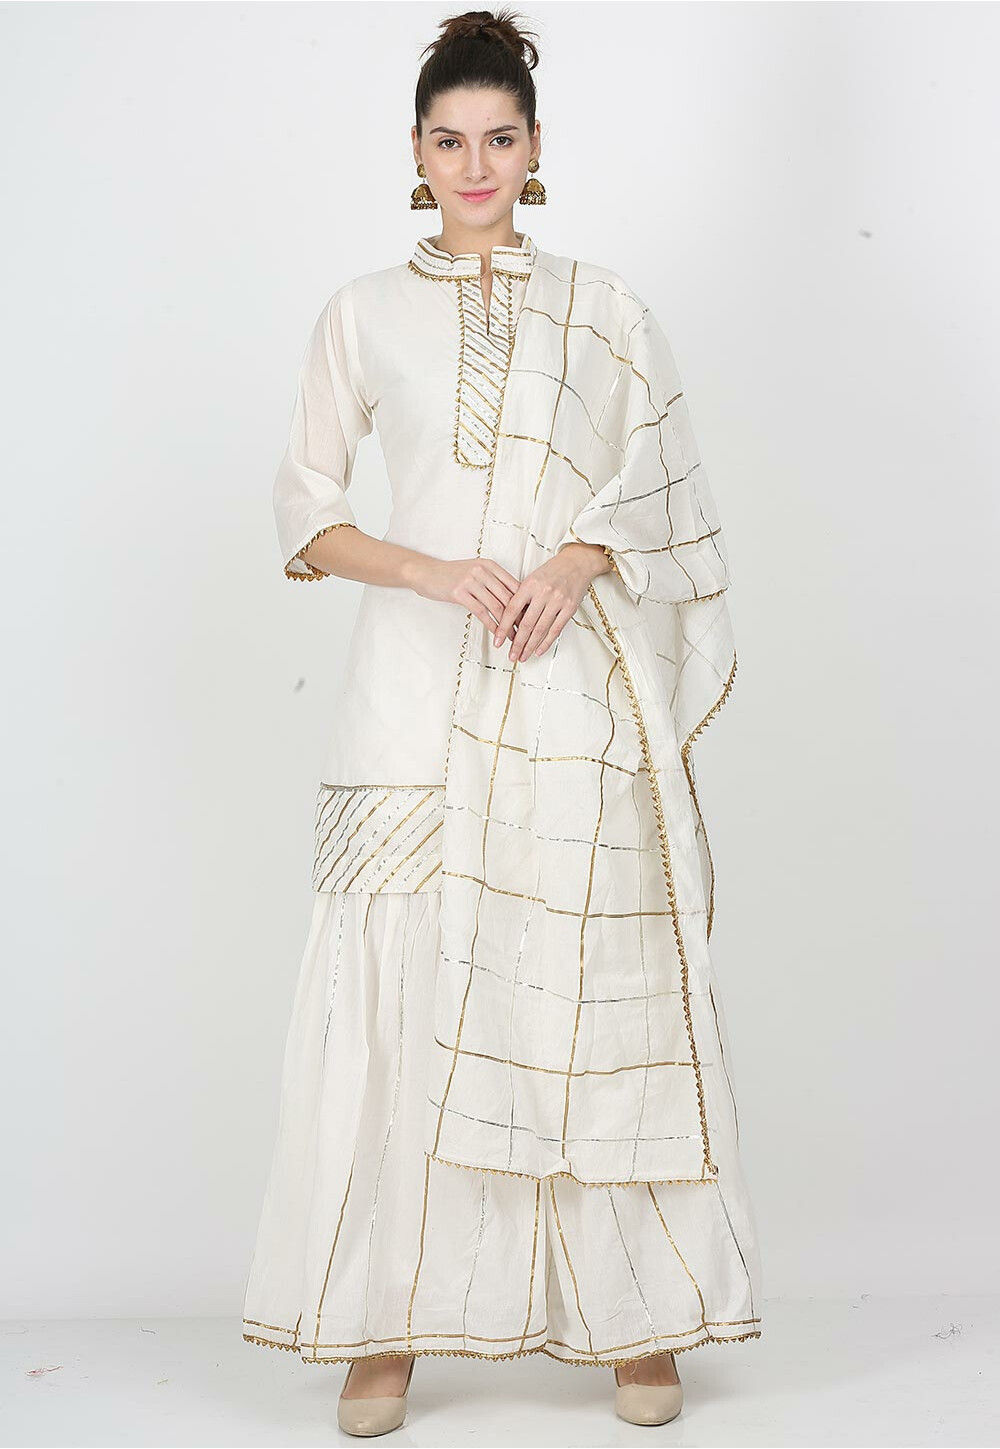 Gota Work Art Chanderi Cotton Pakistani Suit in Off White : KMV83